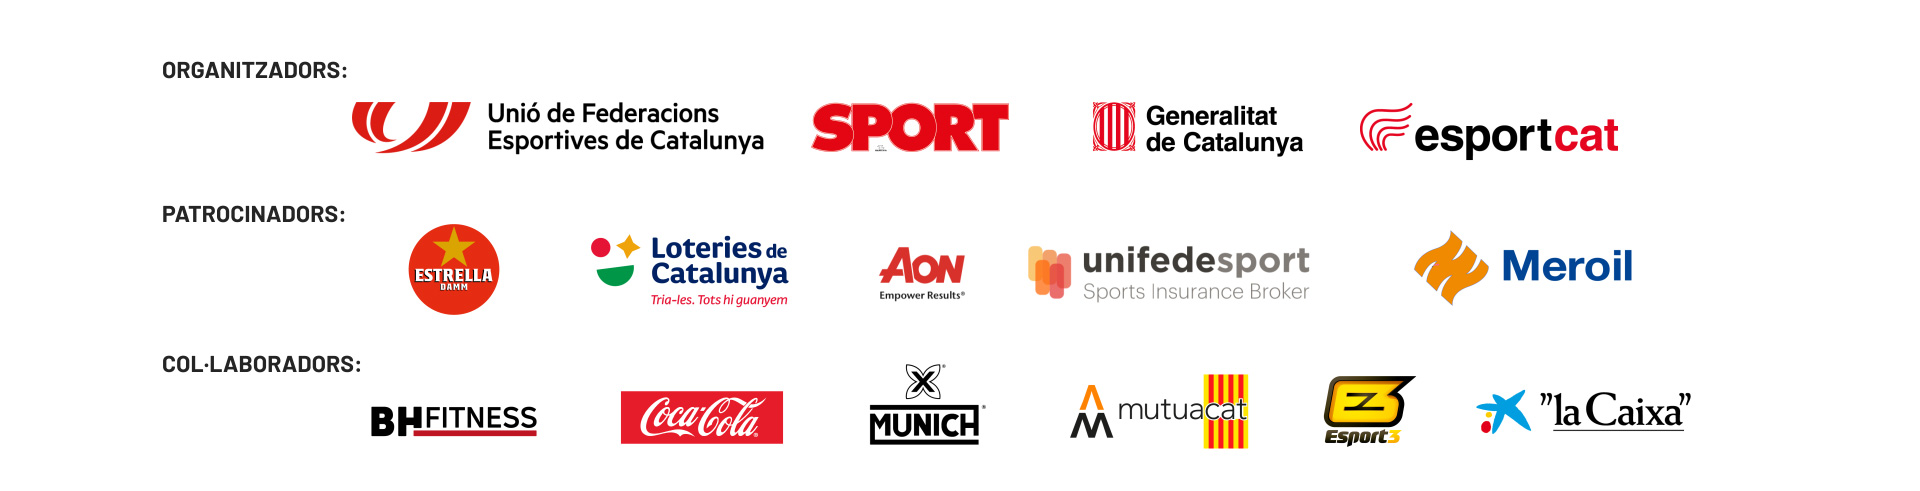 festa-esport-catala-2020-motion-graphics-brands-screenshot